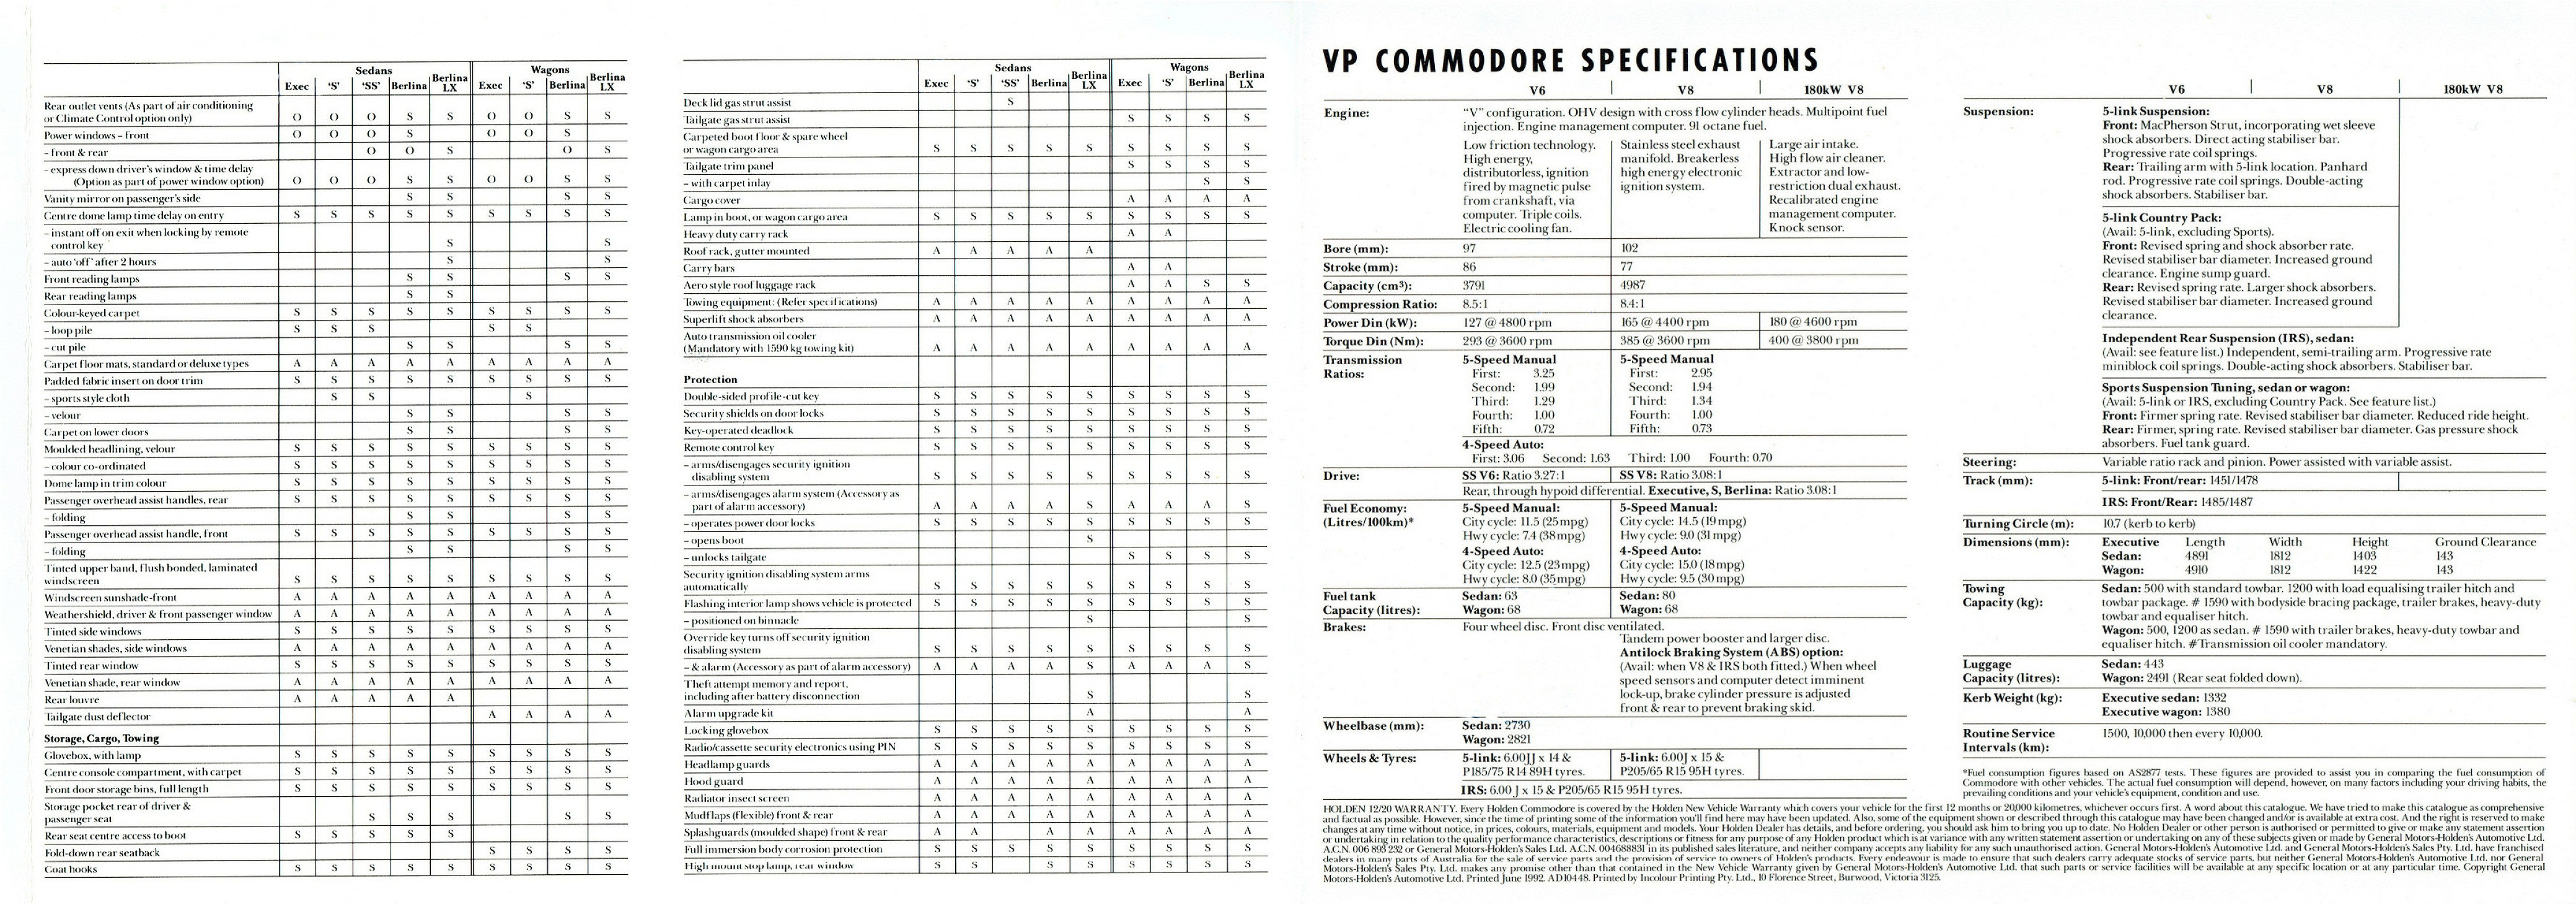 1992_Holden_VP_Commodore-28-29